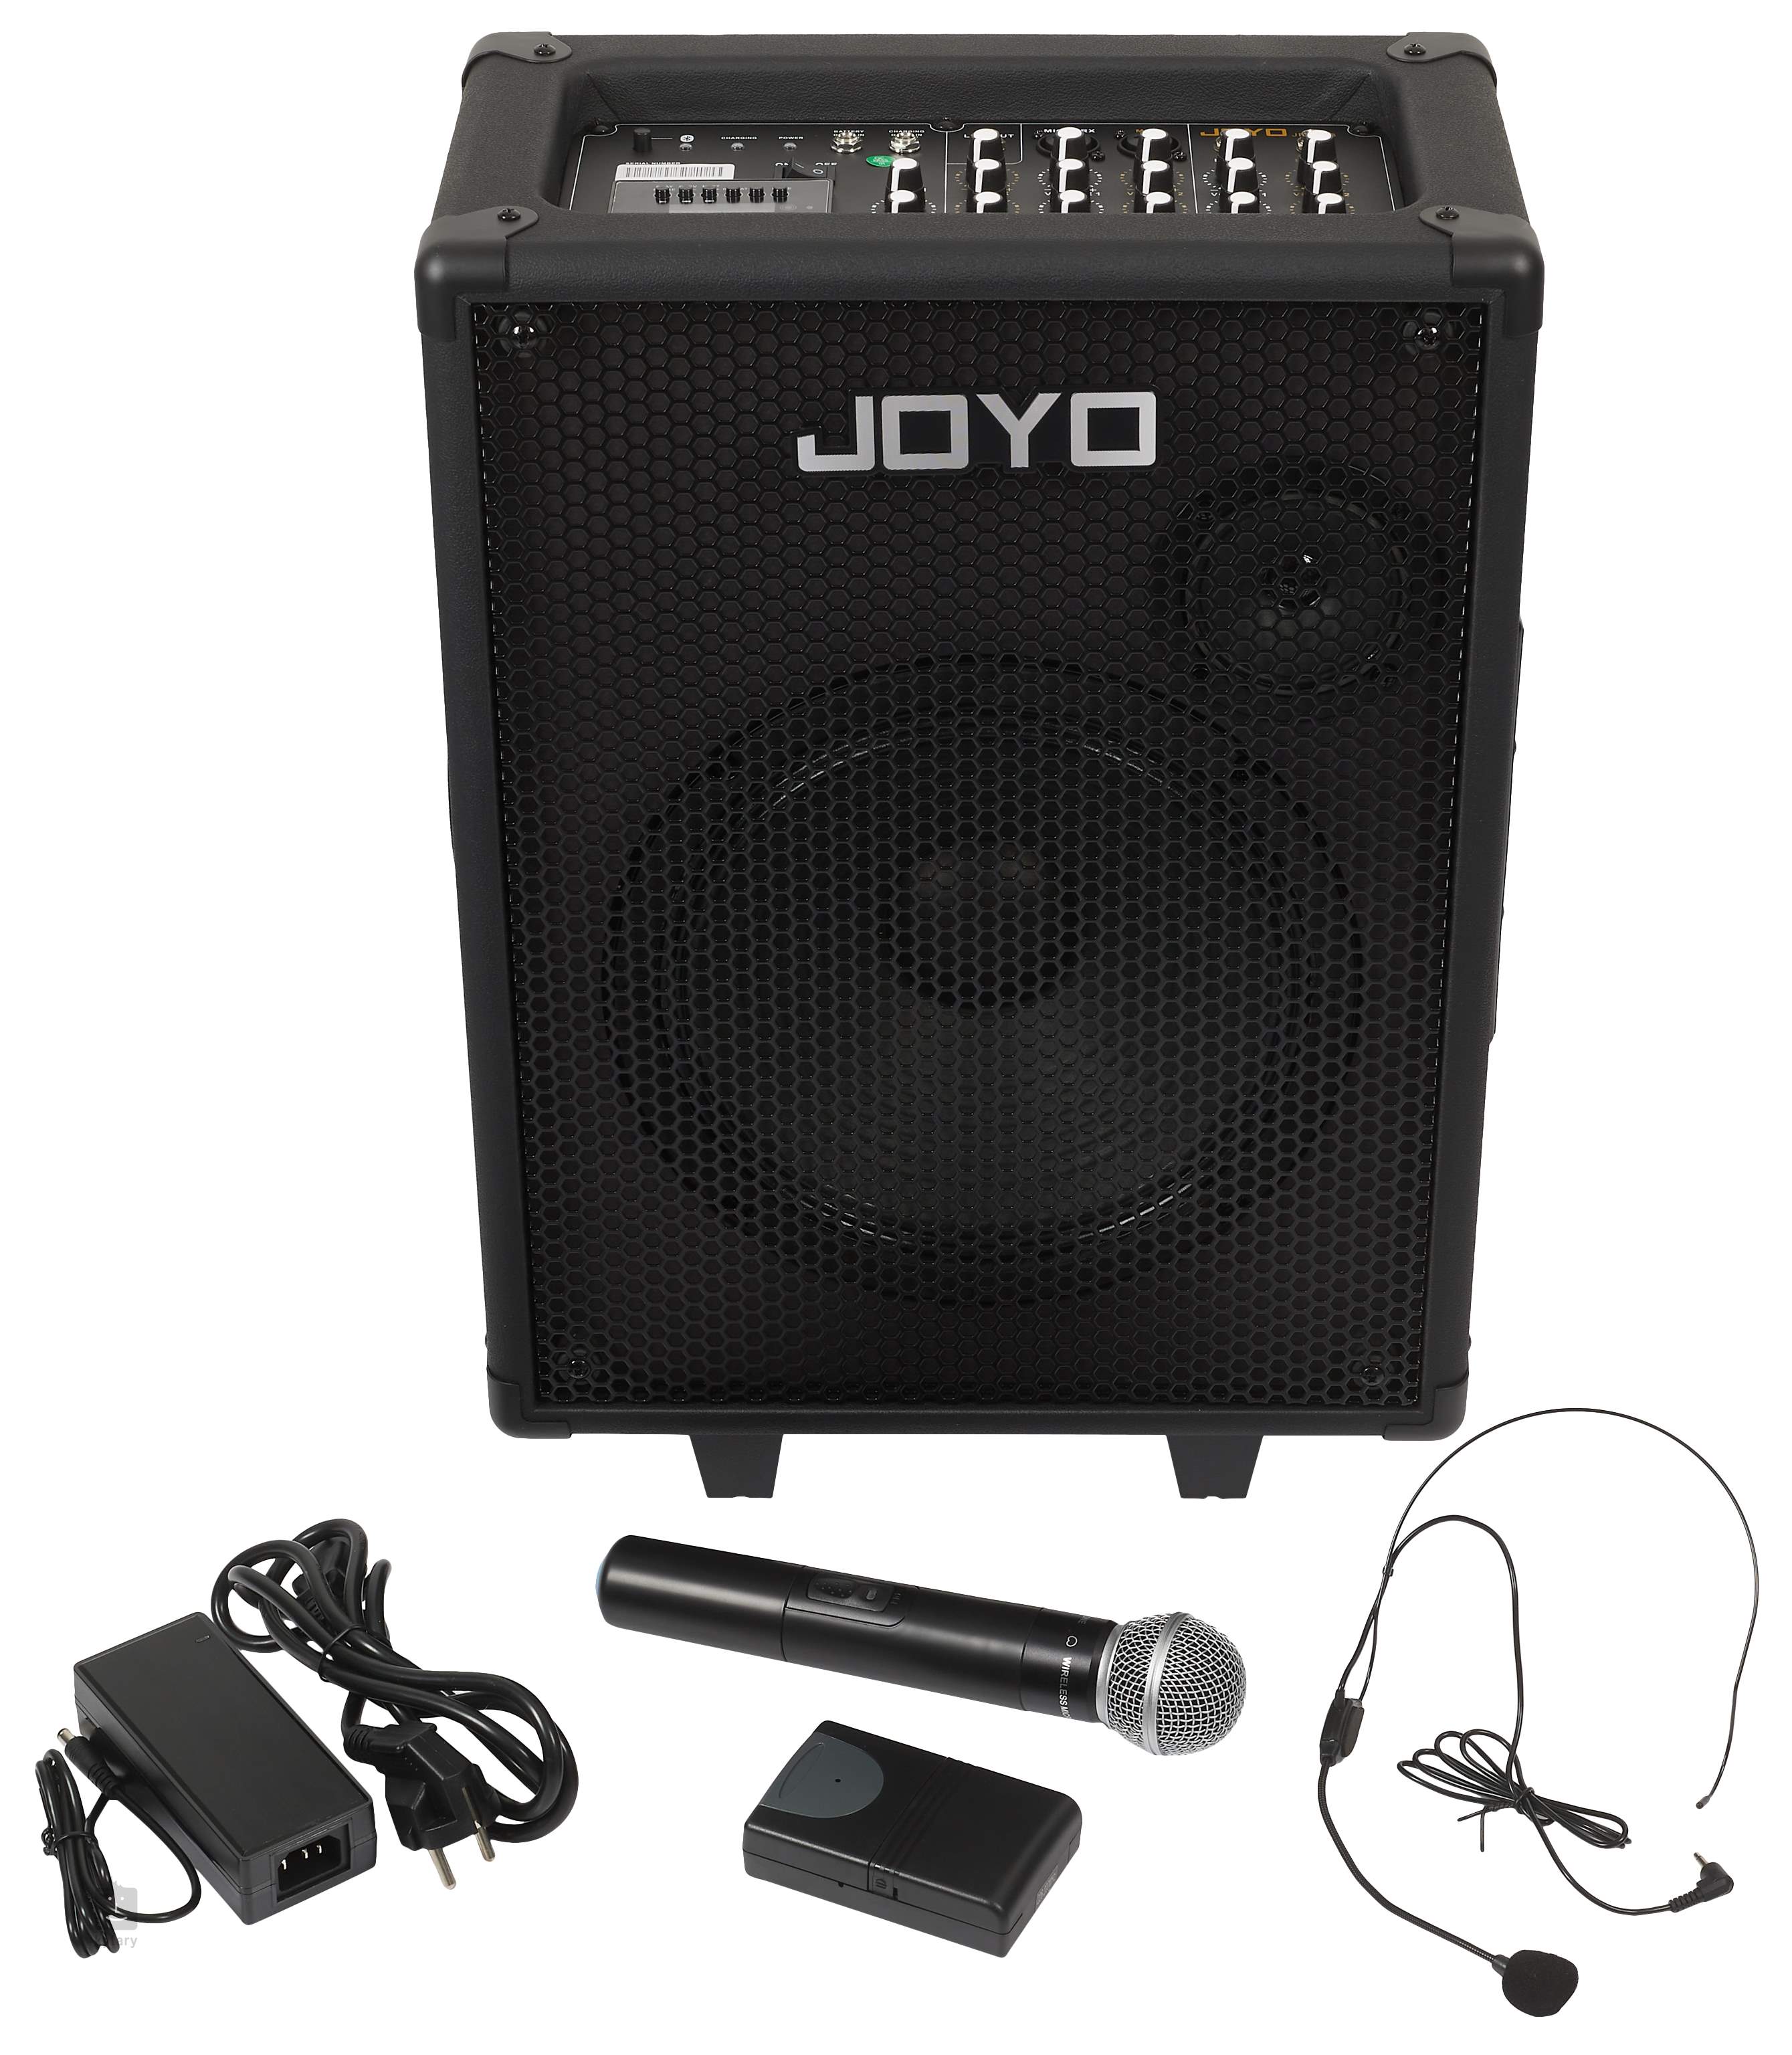 Ampli Portable Bluetooth Joyo JPA863